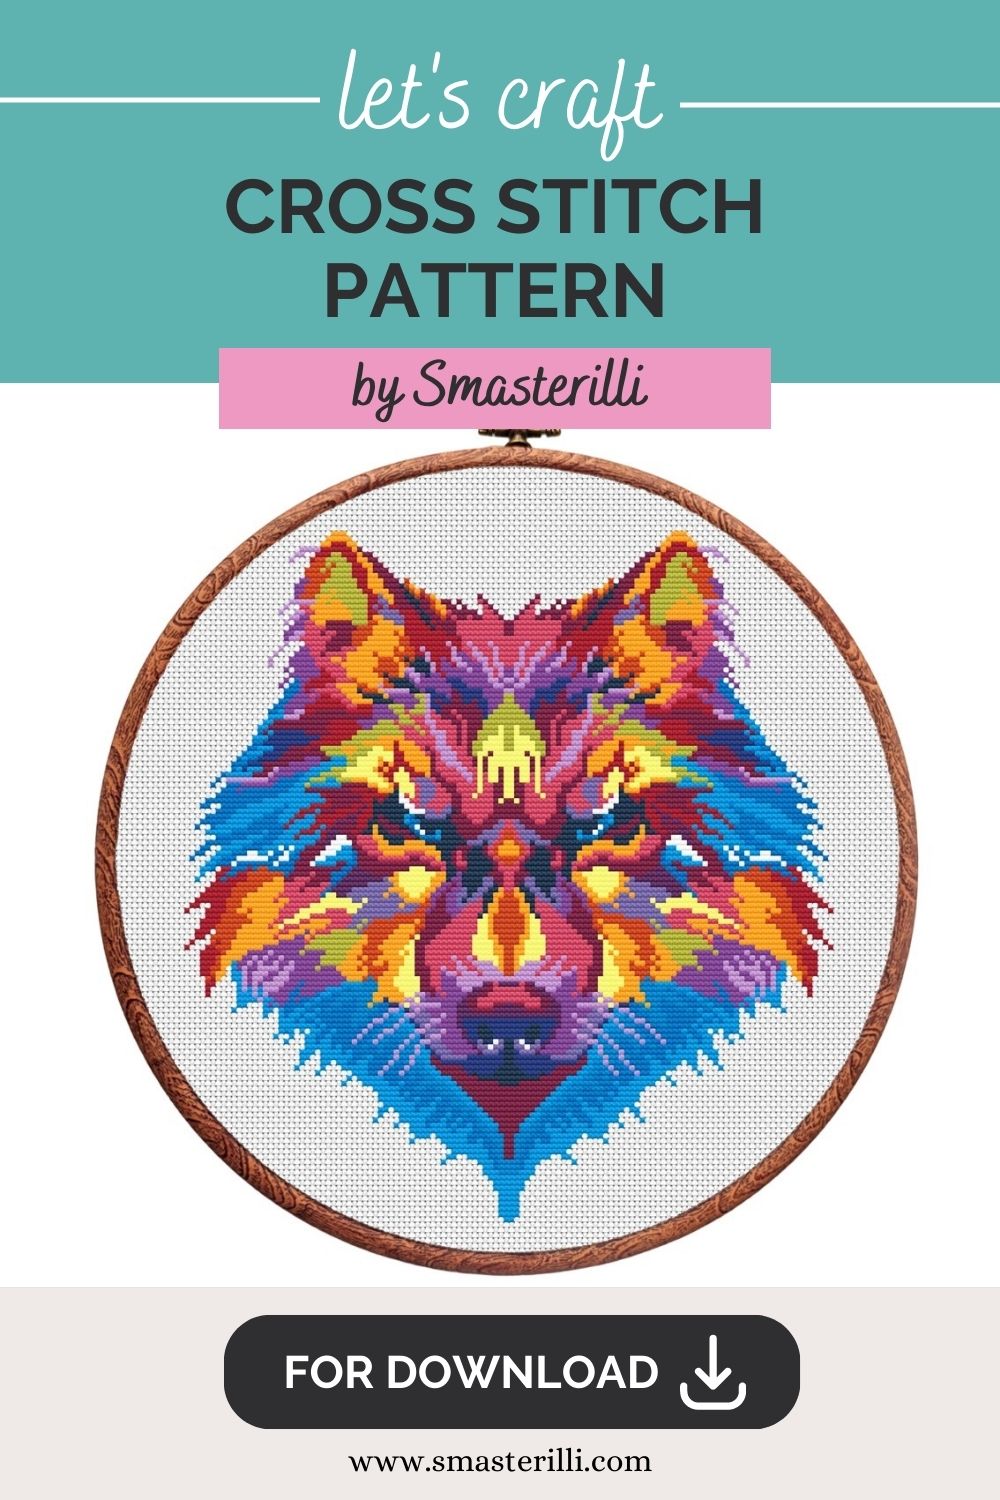 Modern geometric cross stitch pattern with wolf, rainbow embroidery ornament PDF by Smasterilli. Digital cross stitch pattern for instant download. #smasterilli #crossstitch #crossstitchpattern #geometric #lowpolyanimals #wolf